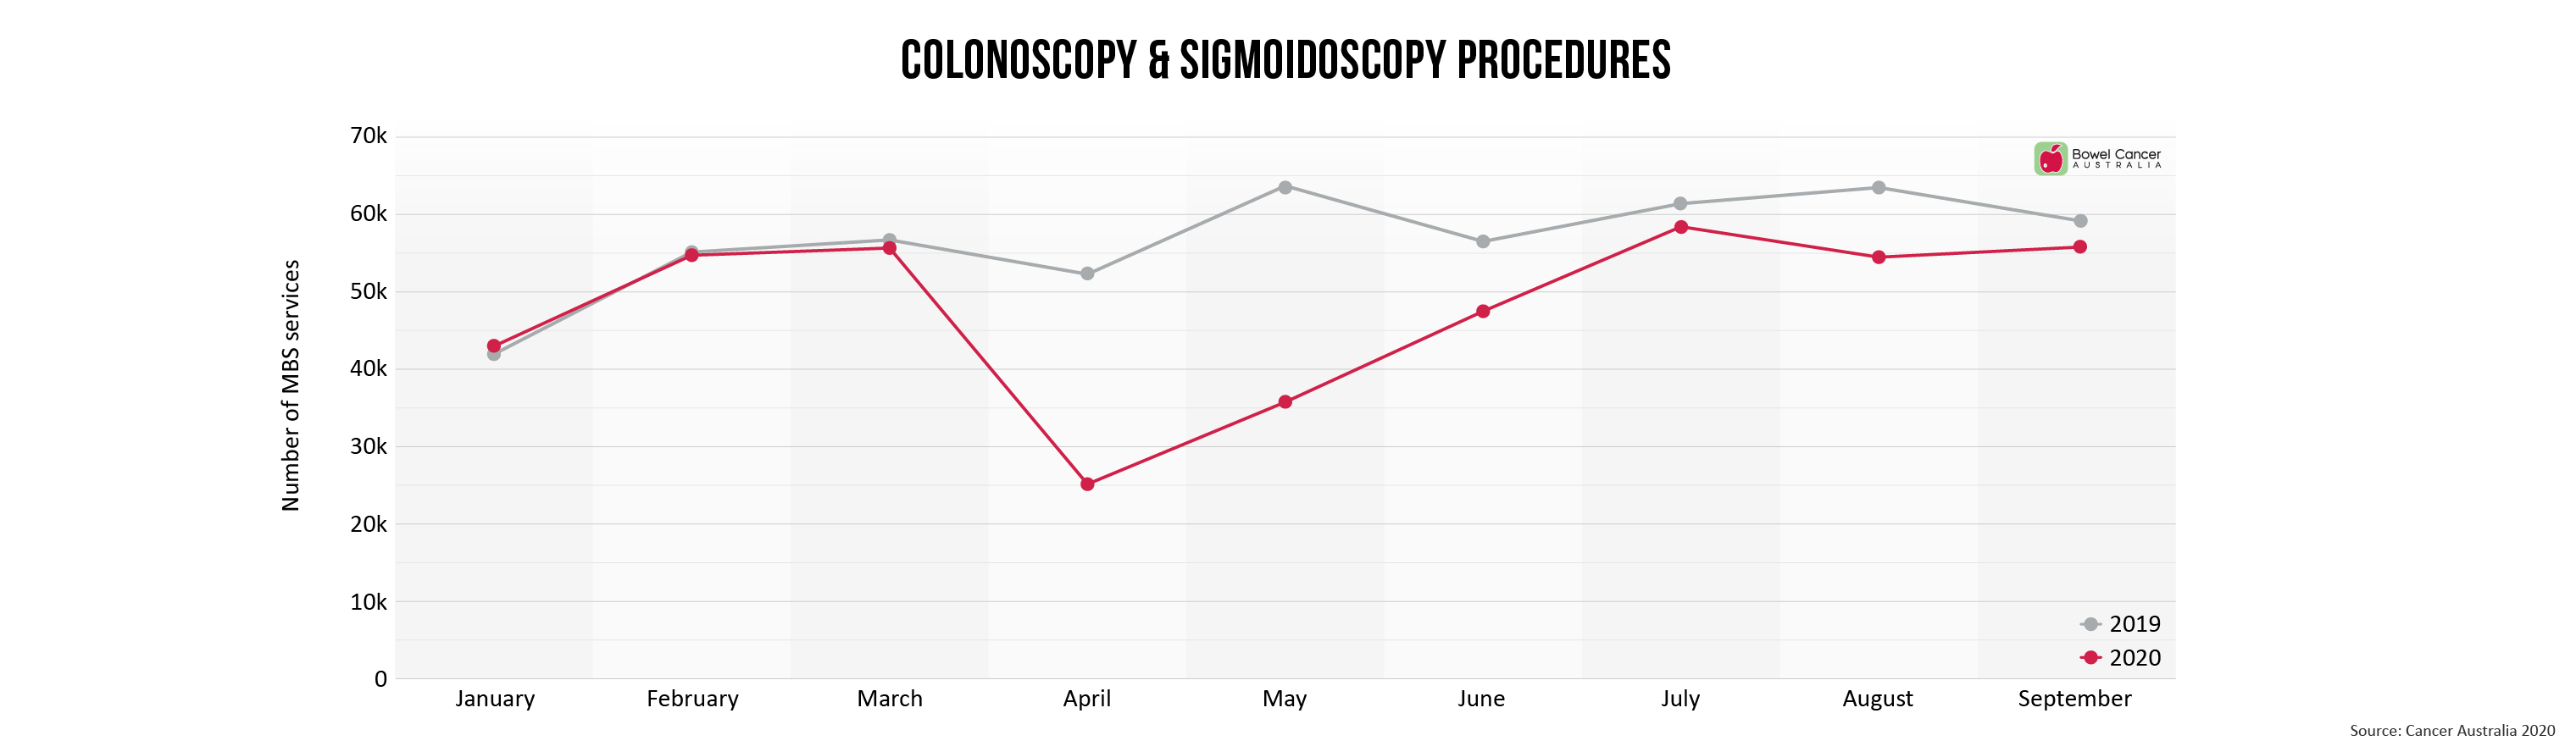 Colonoscopy and sigmoidoscopy procedures